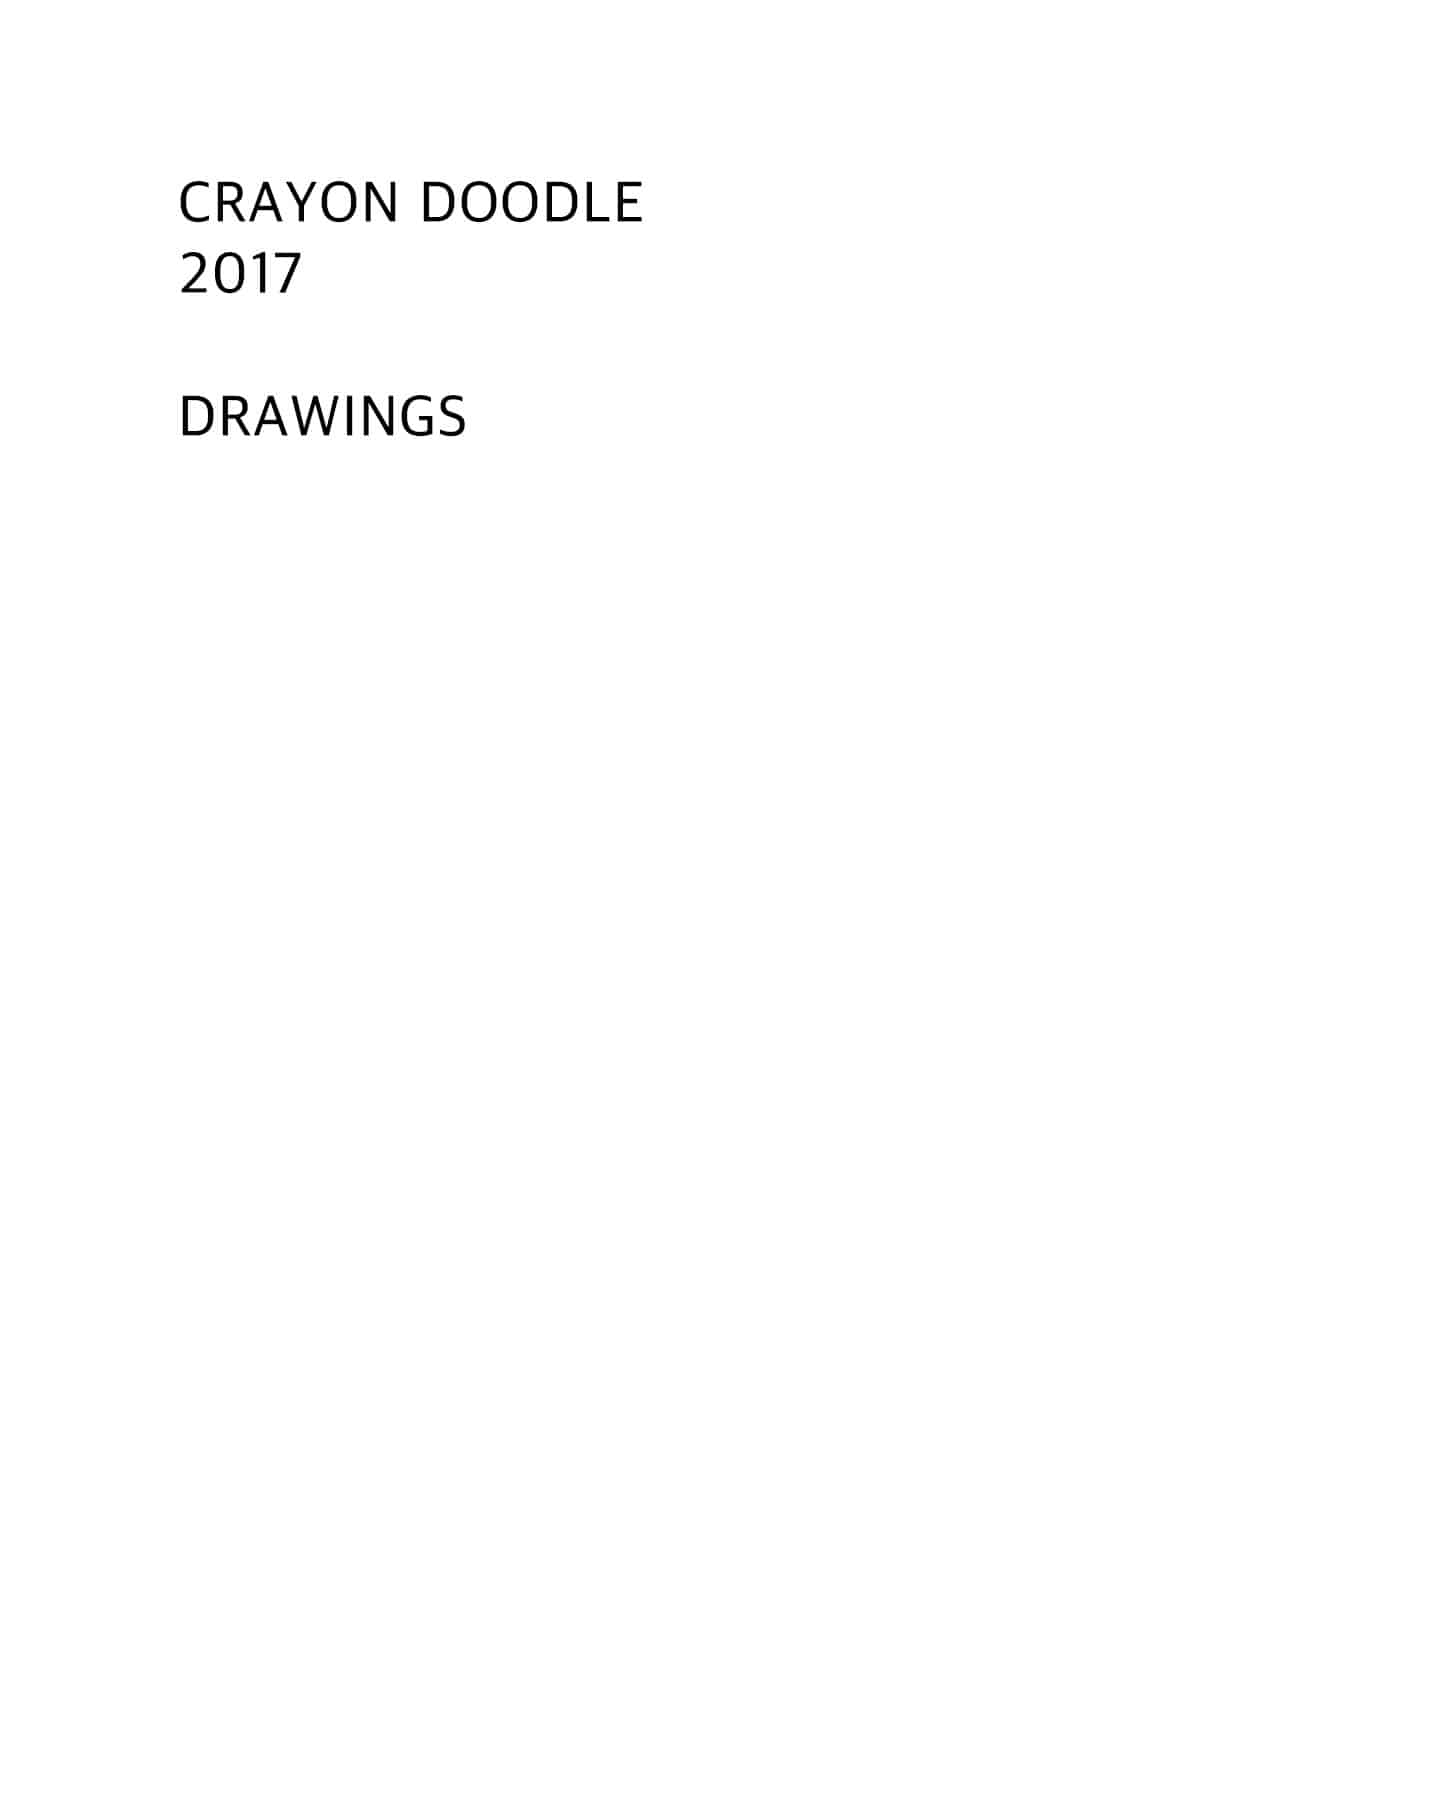 CRAYON DOODLE 2017, drawings